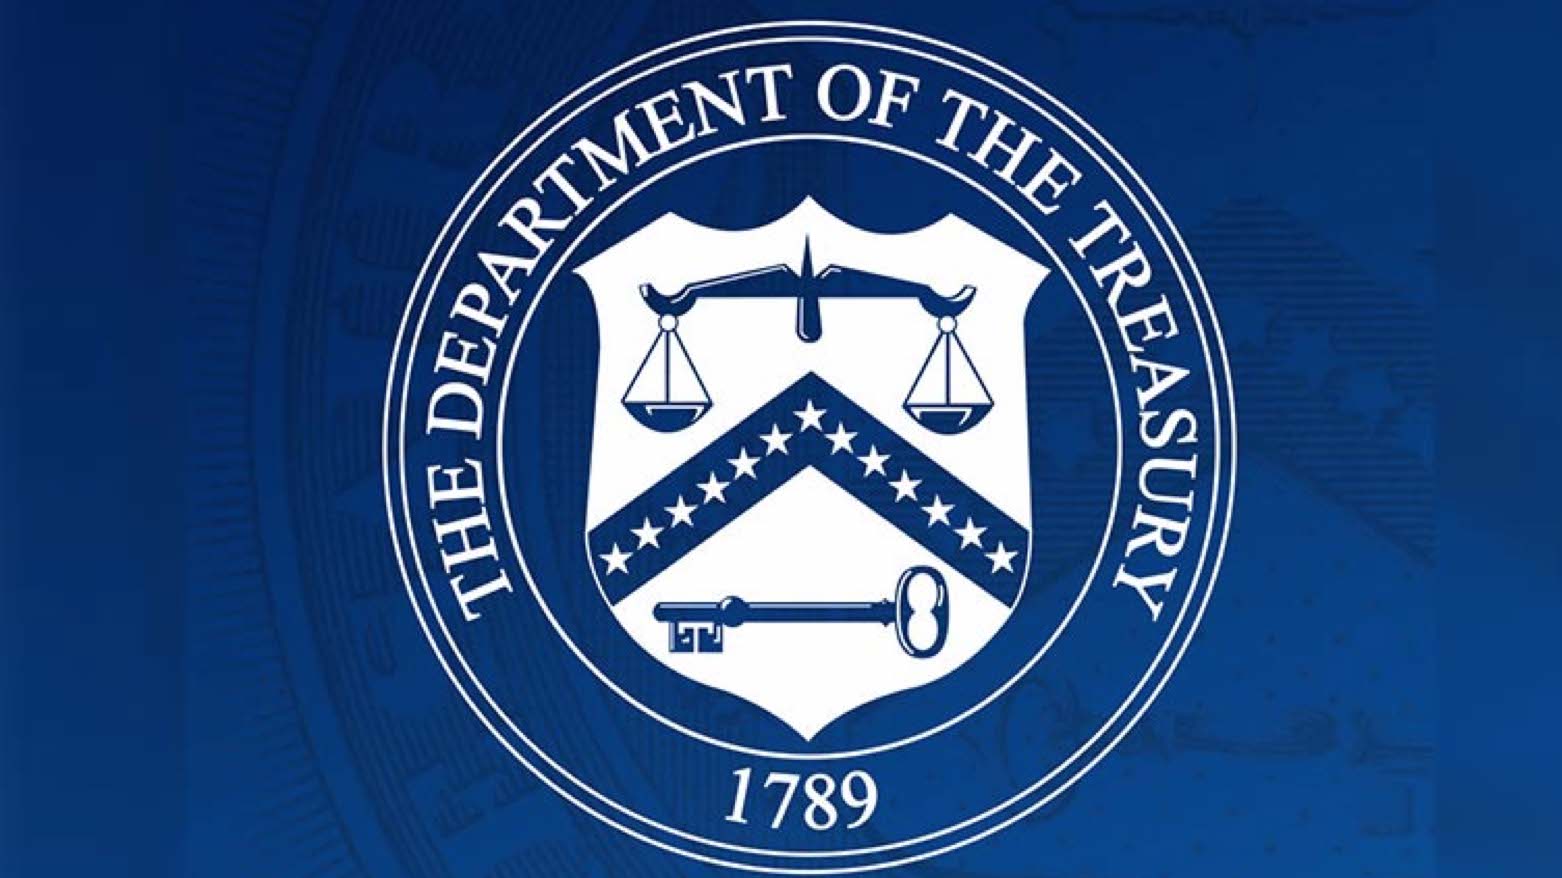 The logo of US Treasury Department. (Photo: US Treasury Department)